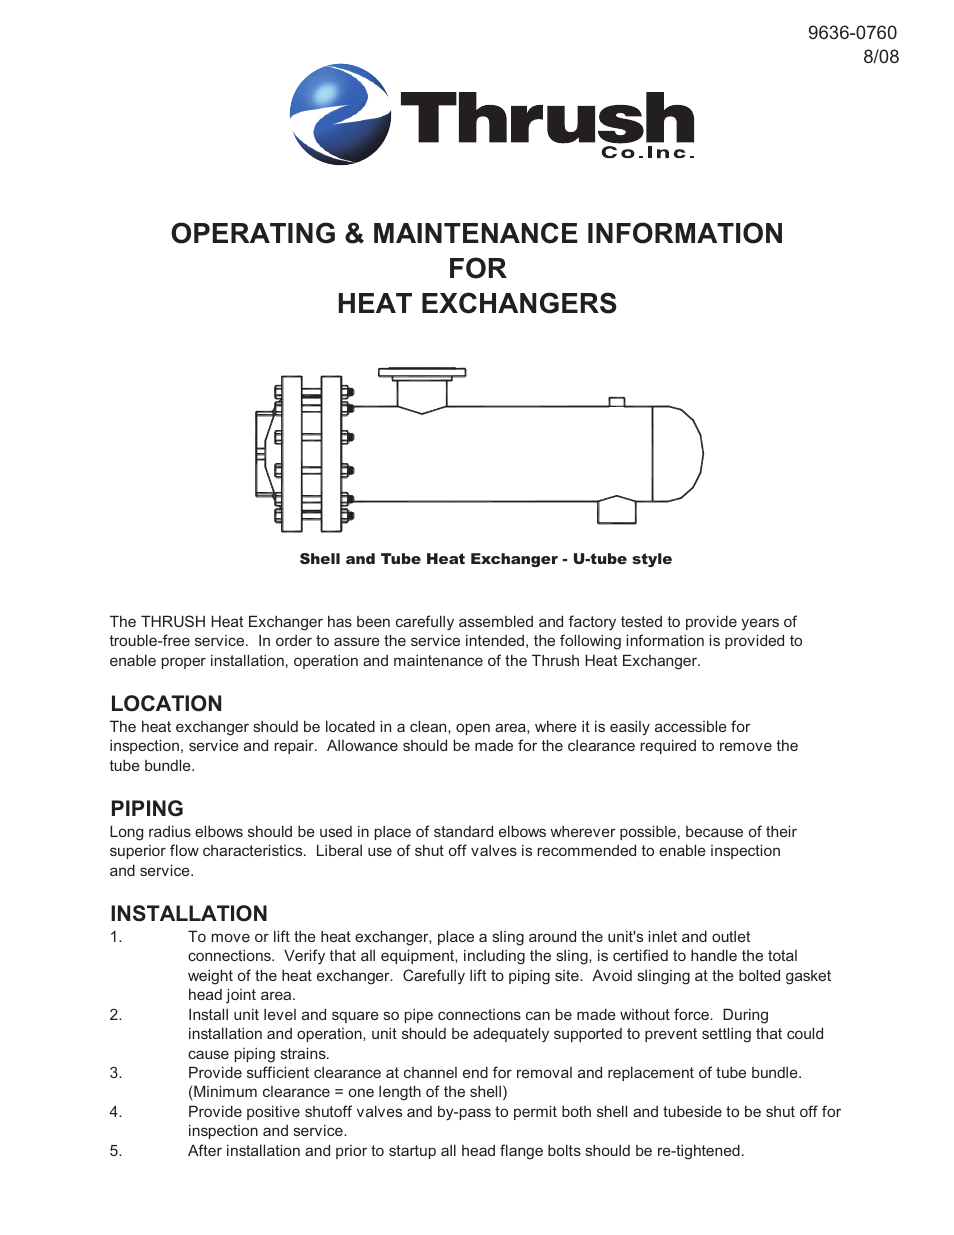 Steam to Water u-tube Heat Exchangers